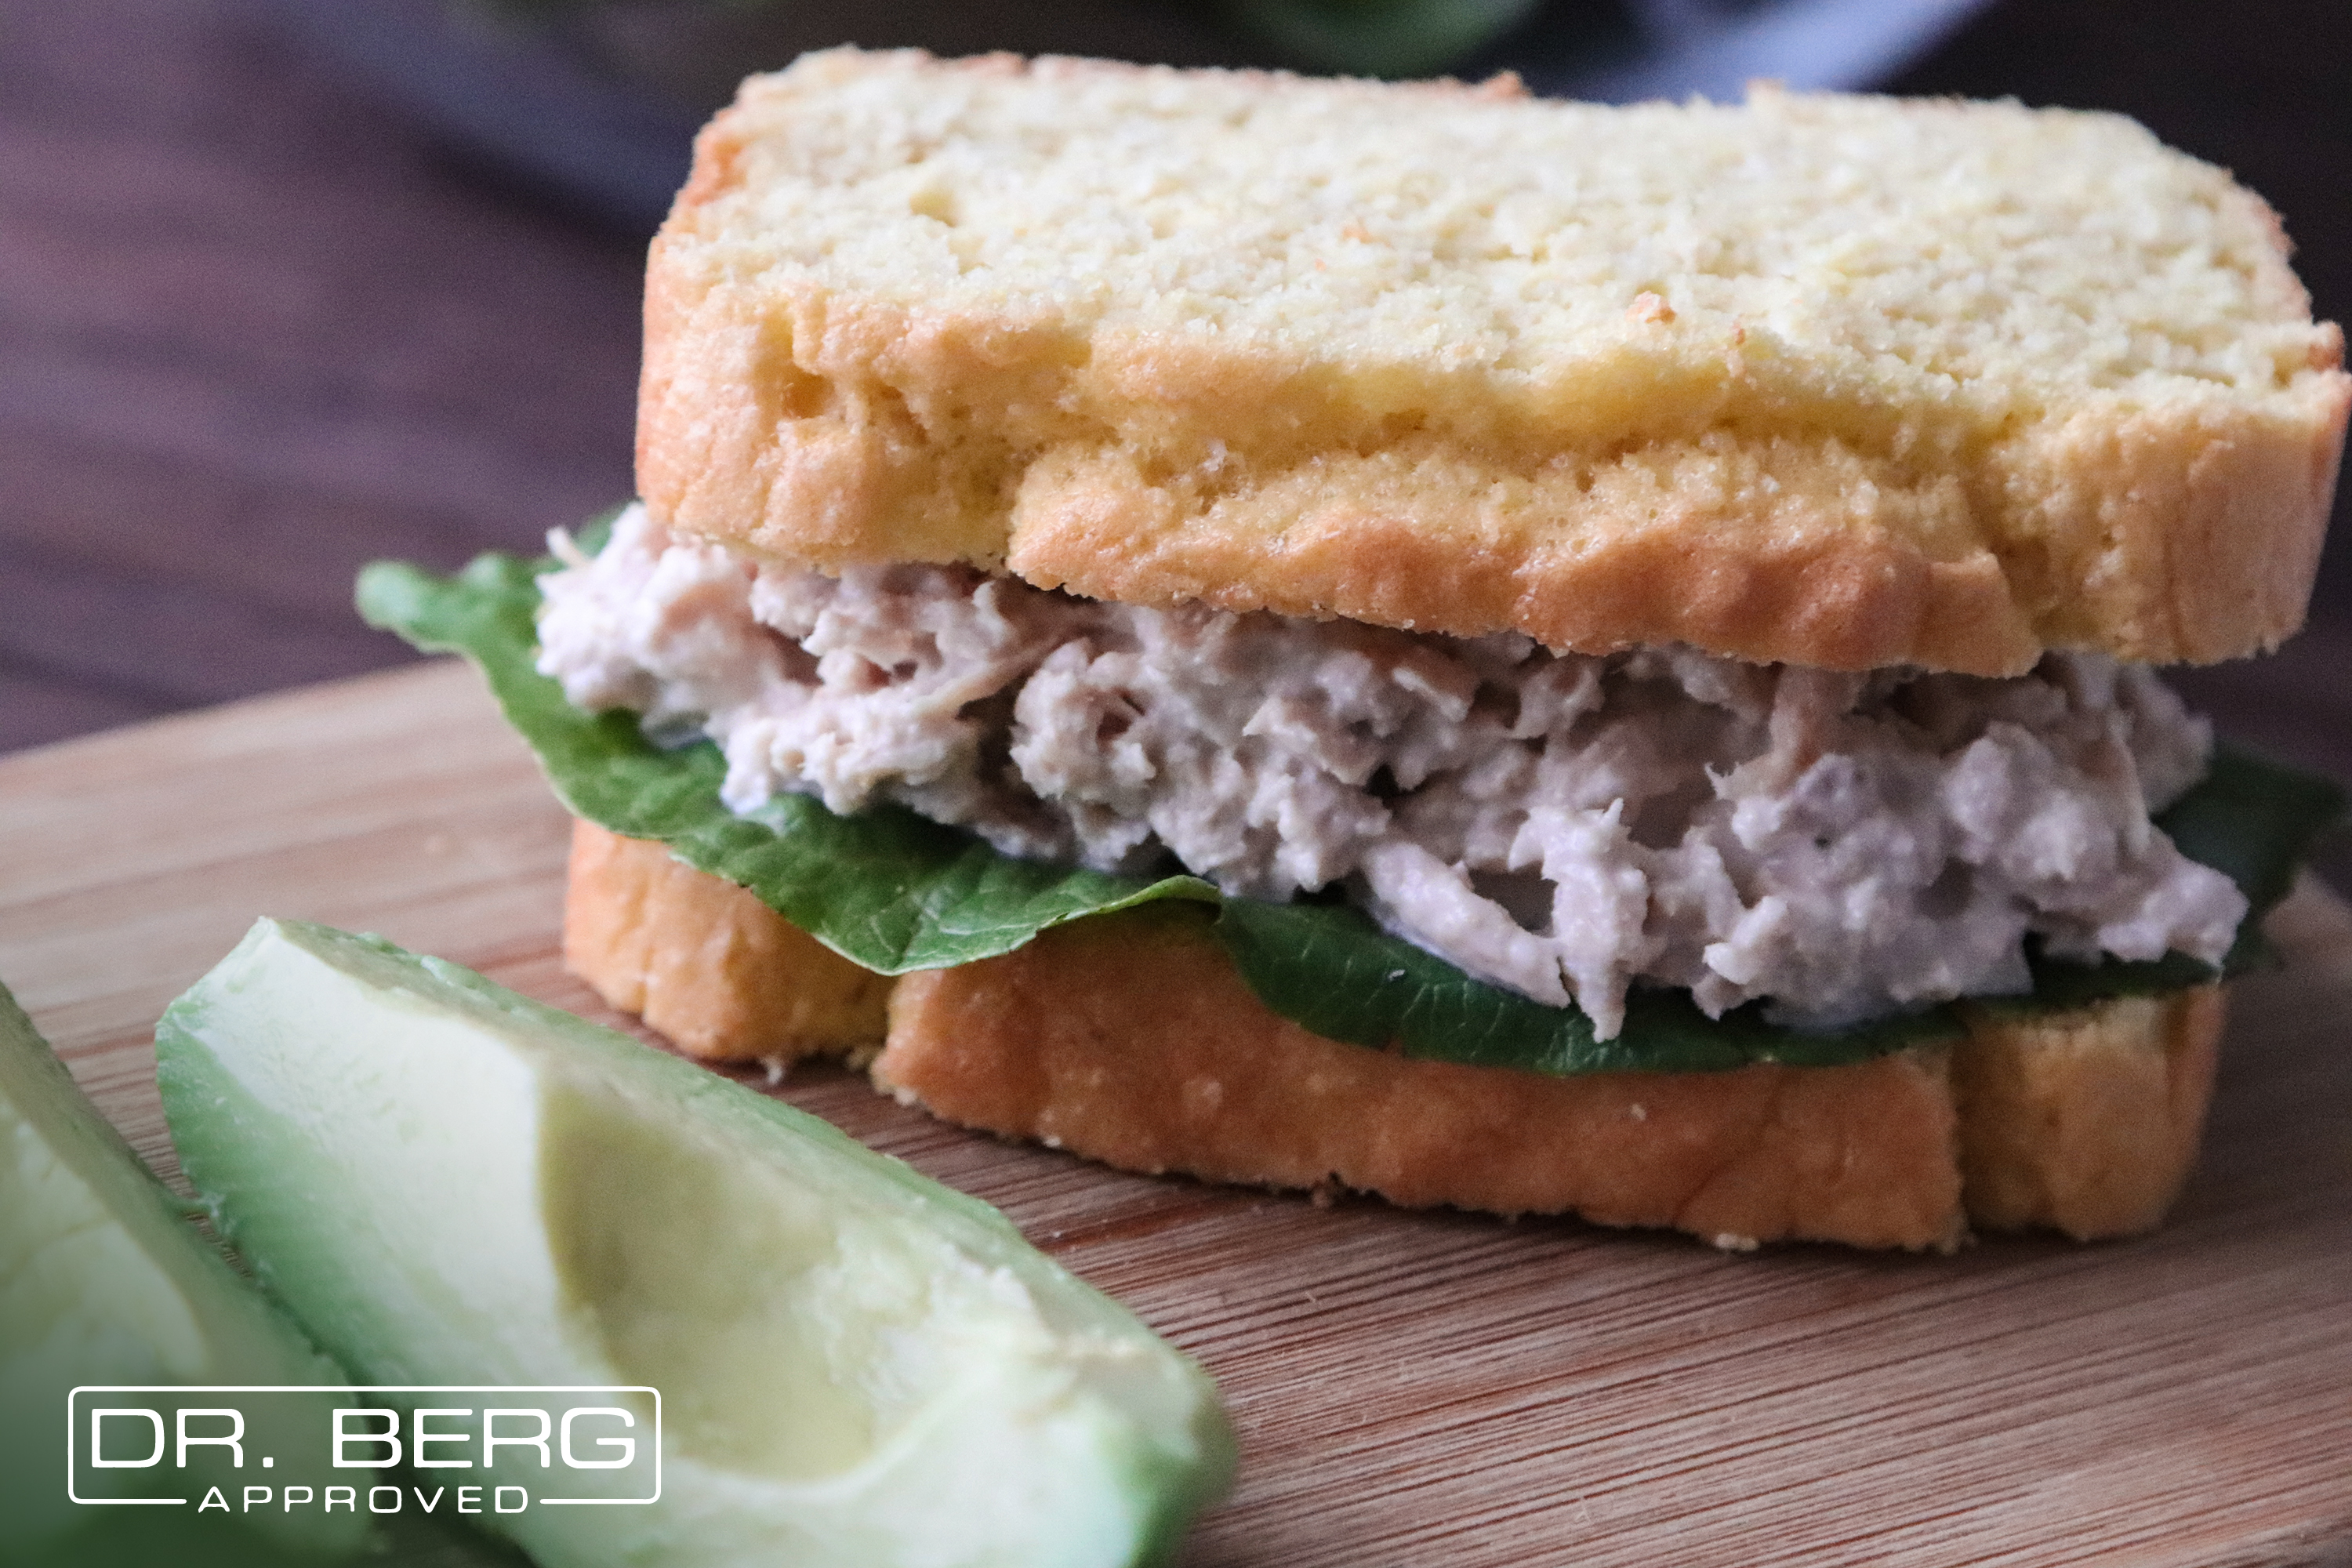 Sandwich Tuna Salad, 7.75 oz - TrueFood